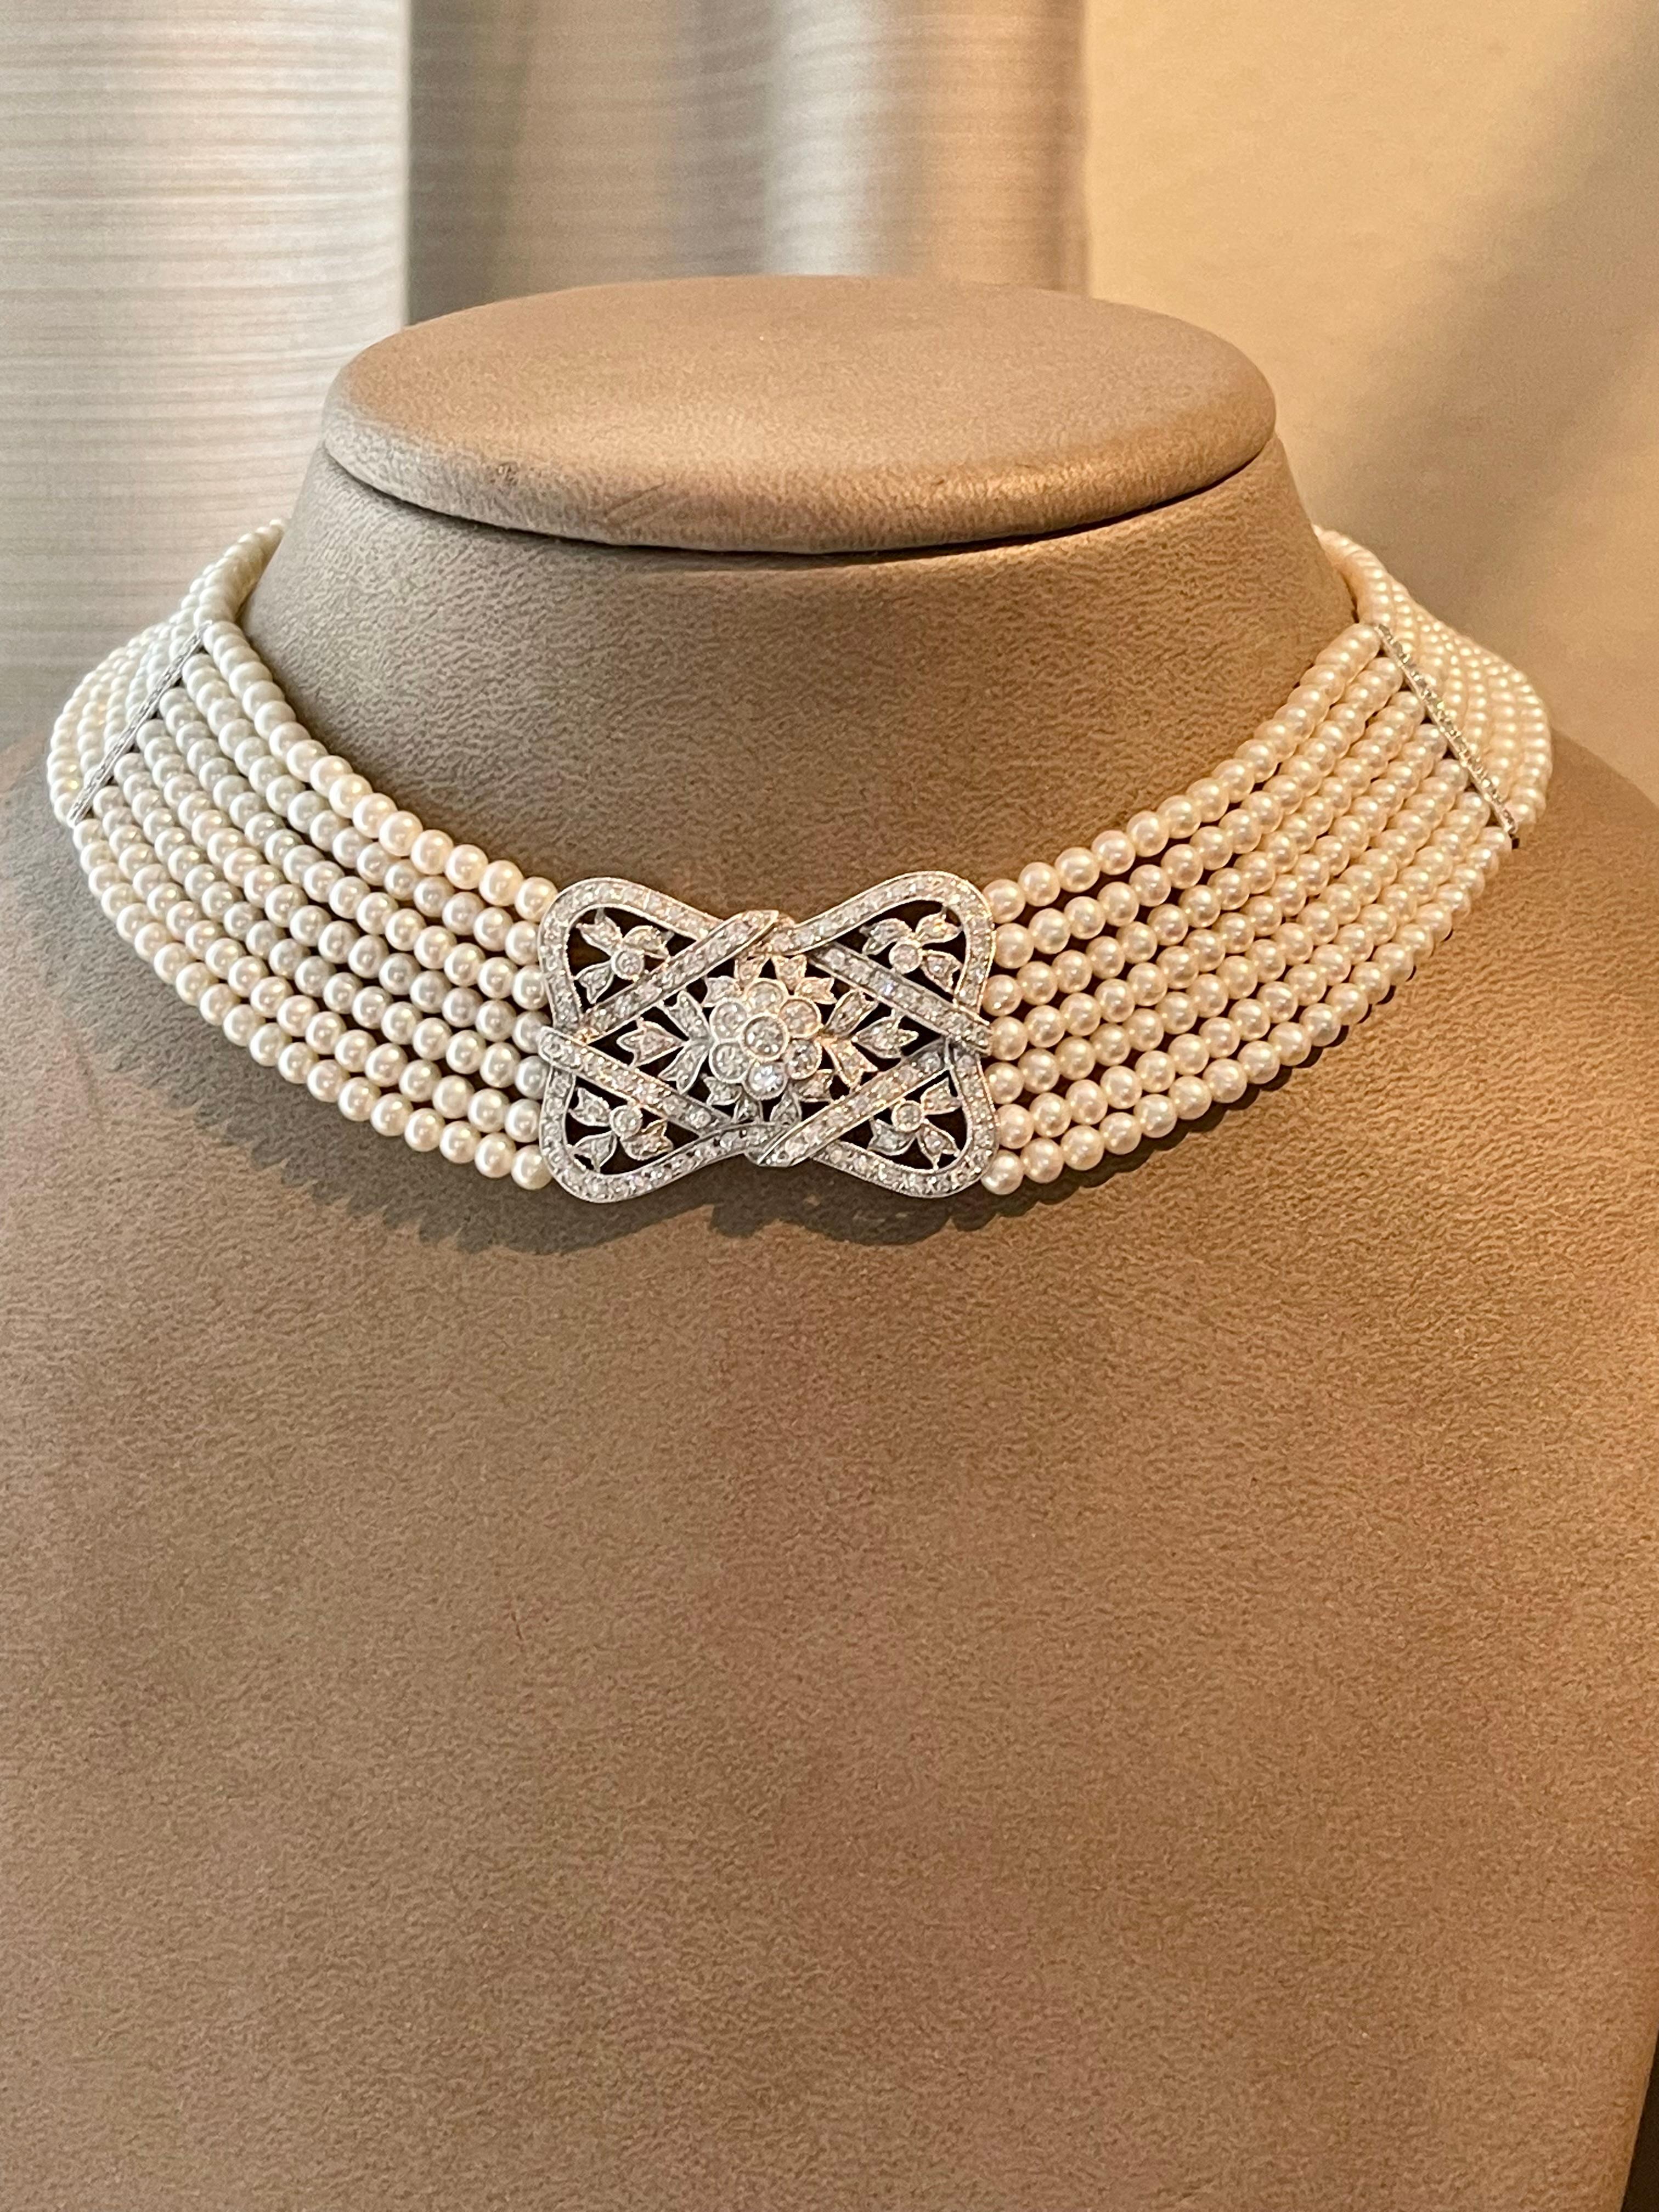 18 K white Pearl Diamond Collar Choker Necklace   2